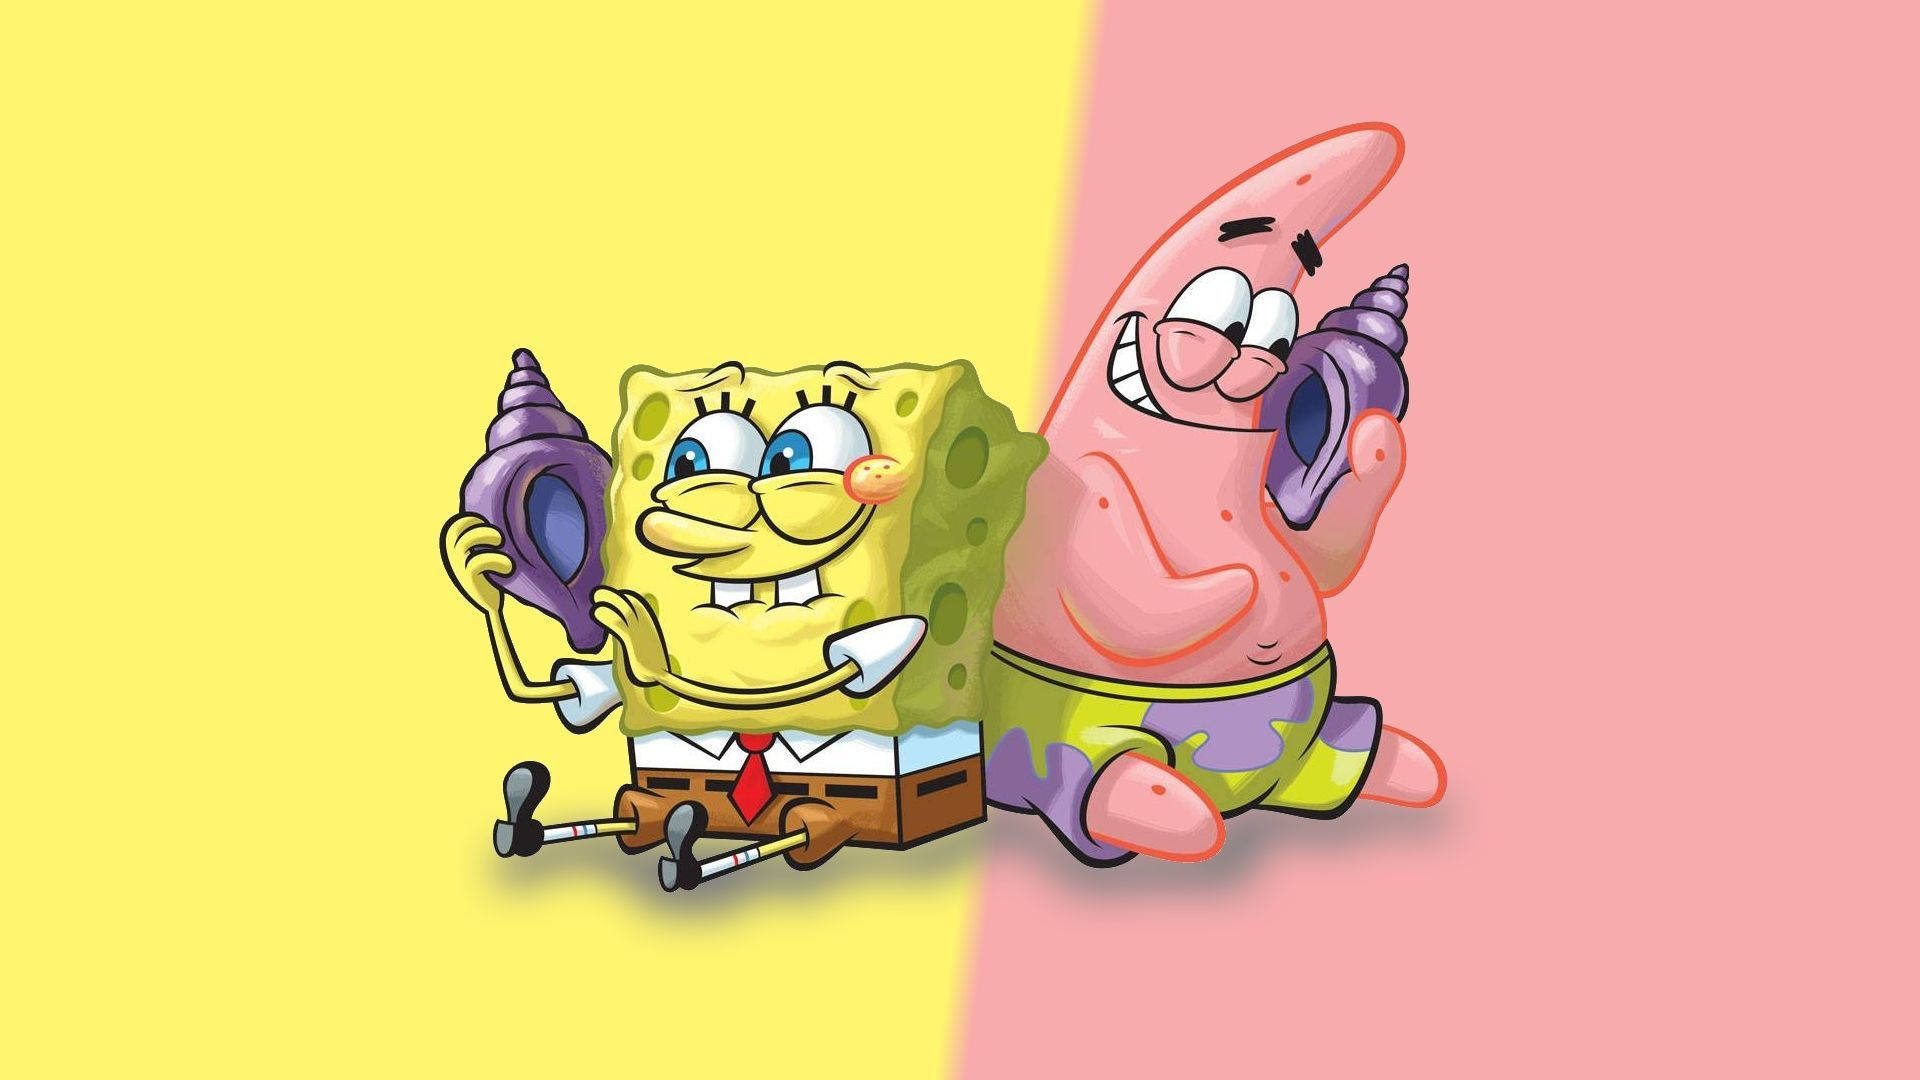 Spongebob and Patrick wallpaper  Friends wallpaper Spongebob wallpaper  Spongebob